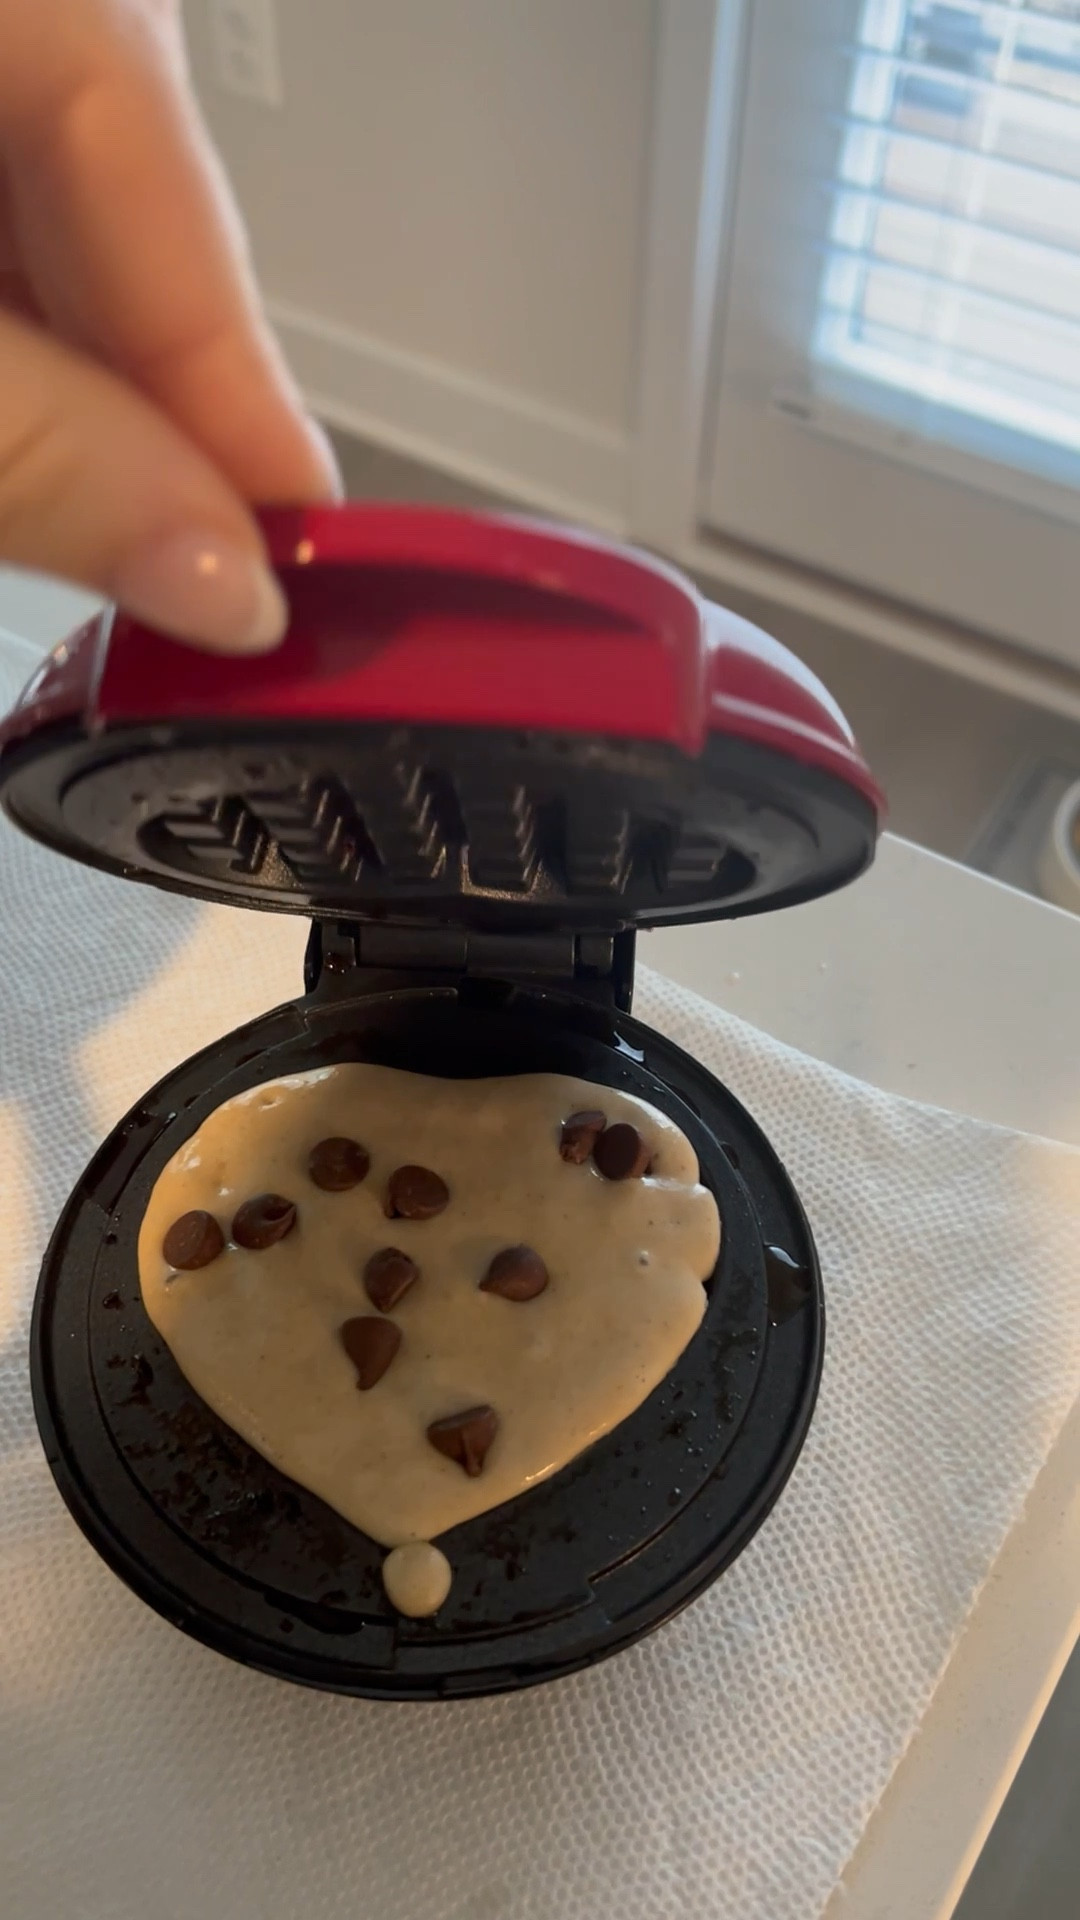 Dash Express Heart Waffle Maker - Macy's